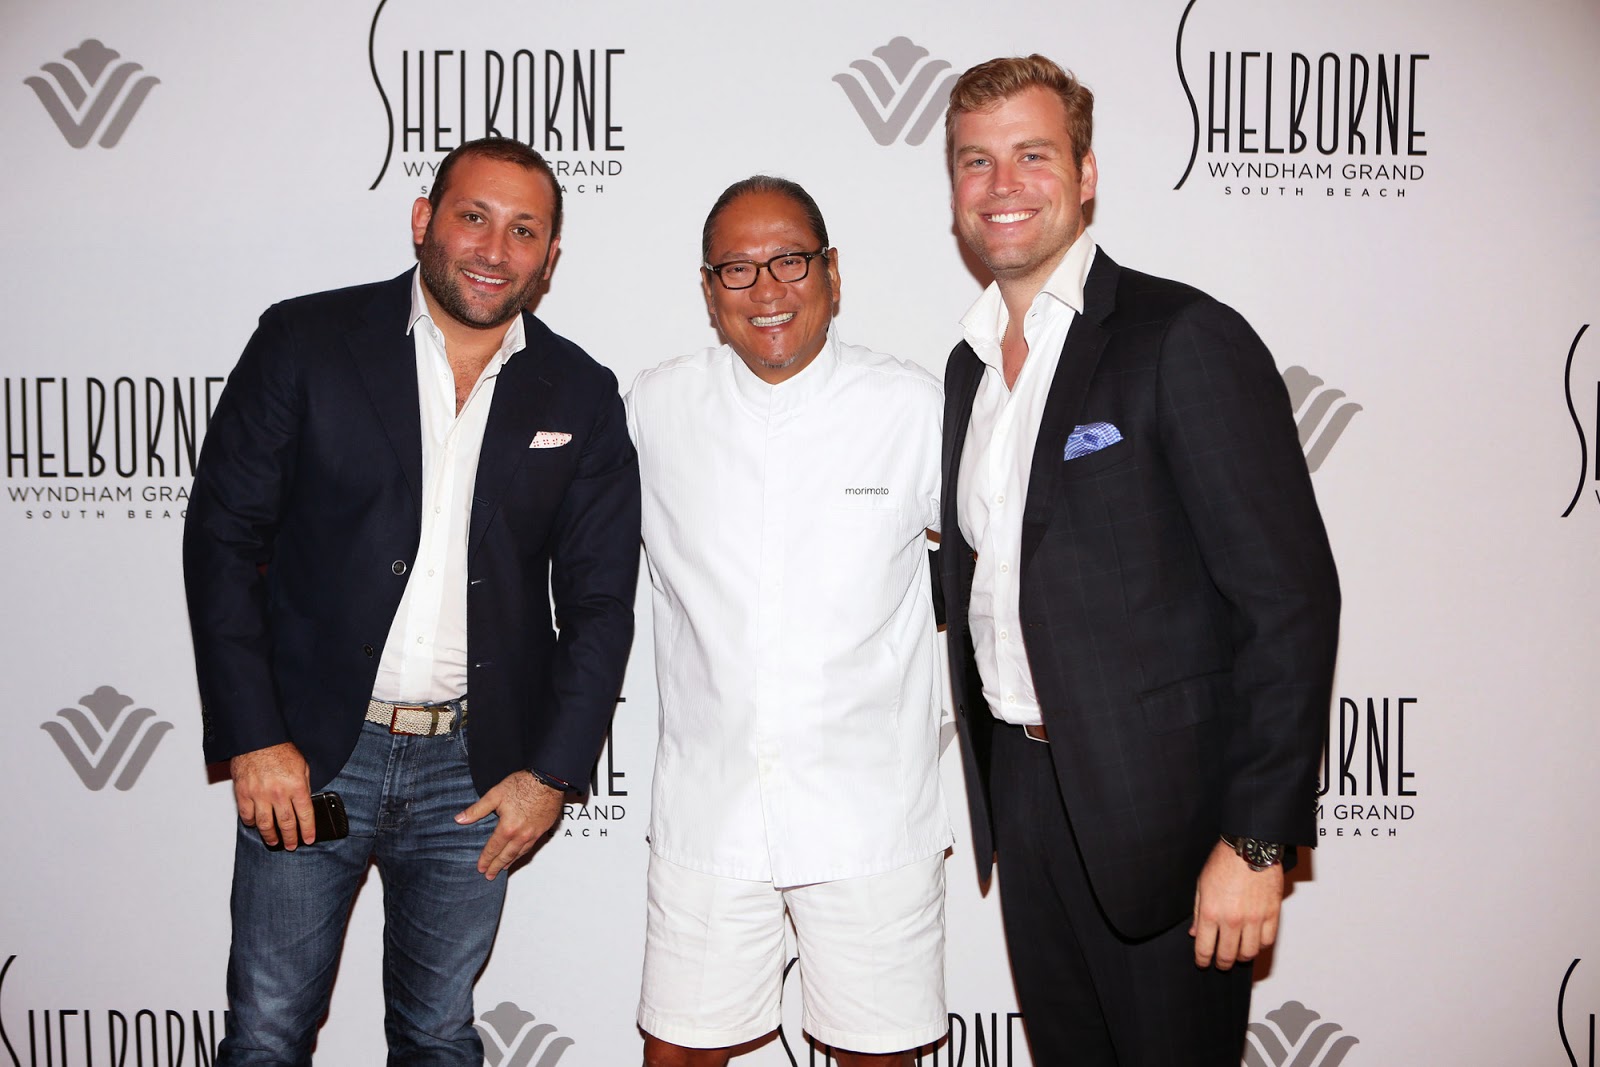 Shelborne Wyndham Grand South Beach Hosts Ribbon Cutting Ceremony and VIP Celebration